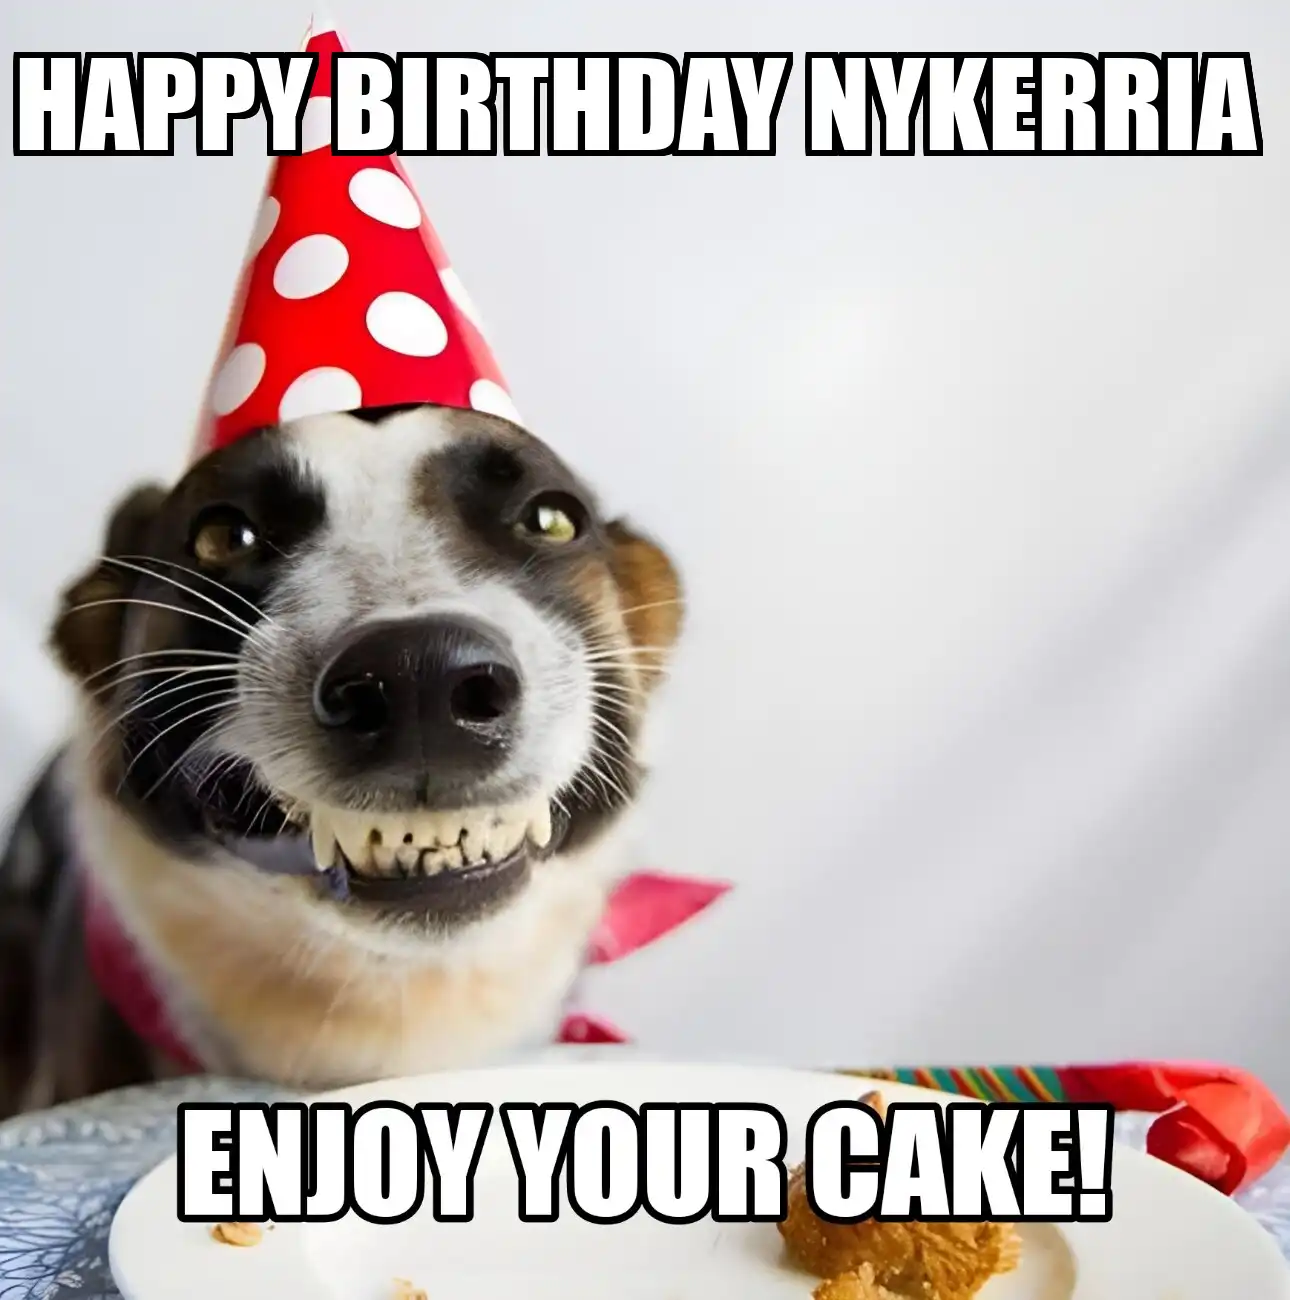 Happy Birthday Nykerria Enjoy Your Cake Dog Meme